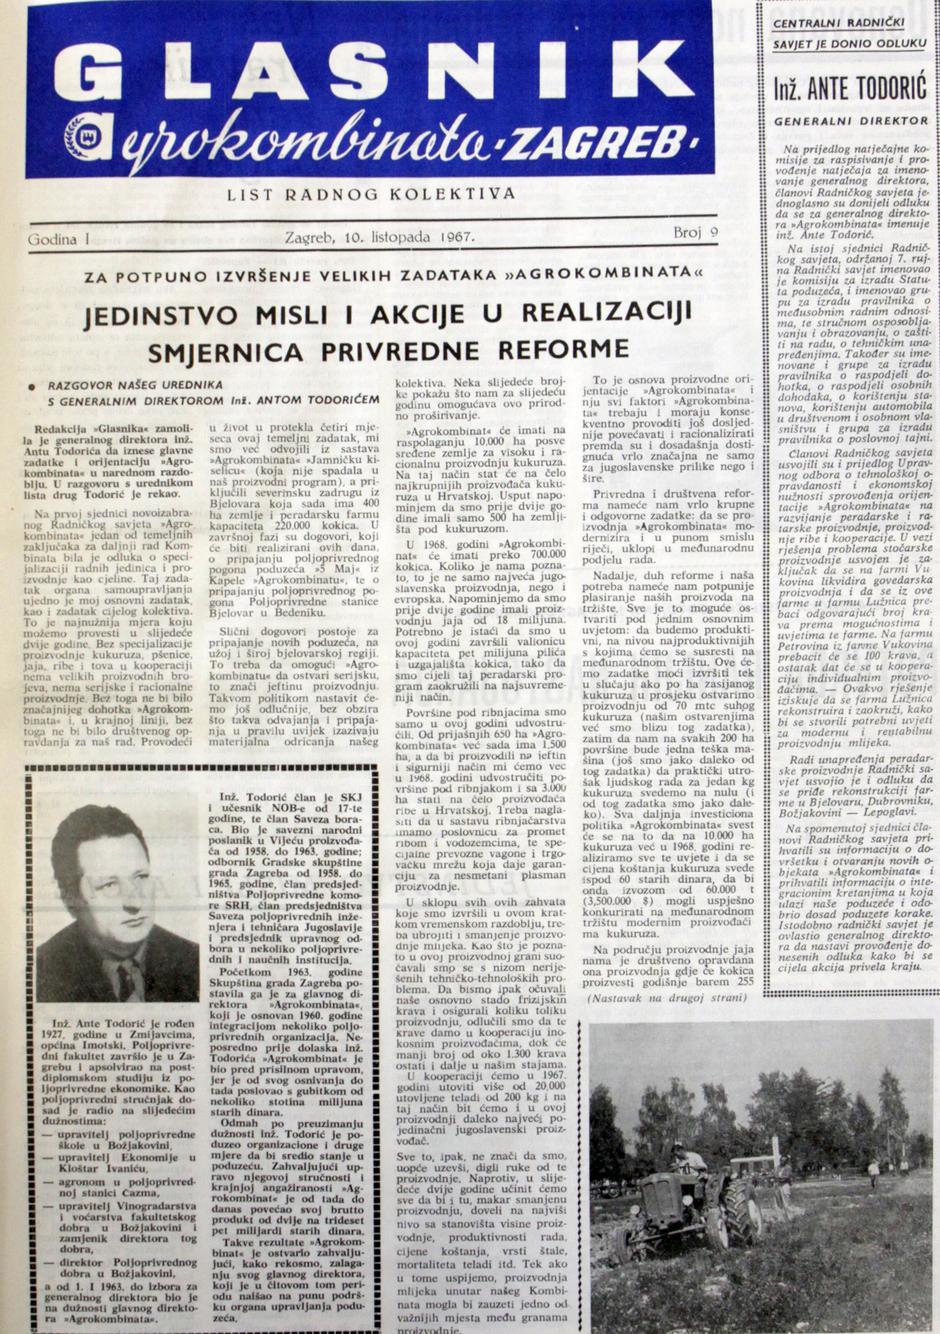 Ante Todorić, otac tajkuna Ivice Todorića, suđenje 1973. | Author: Express.hr